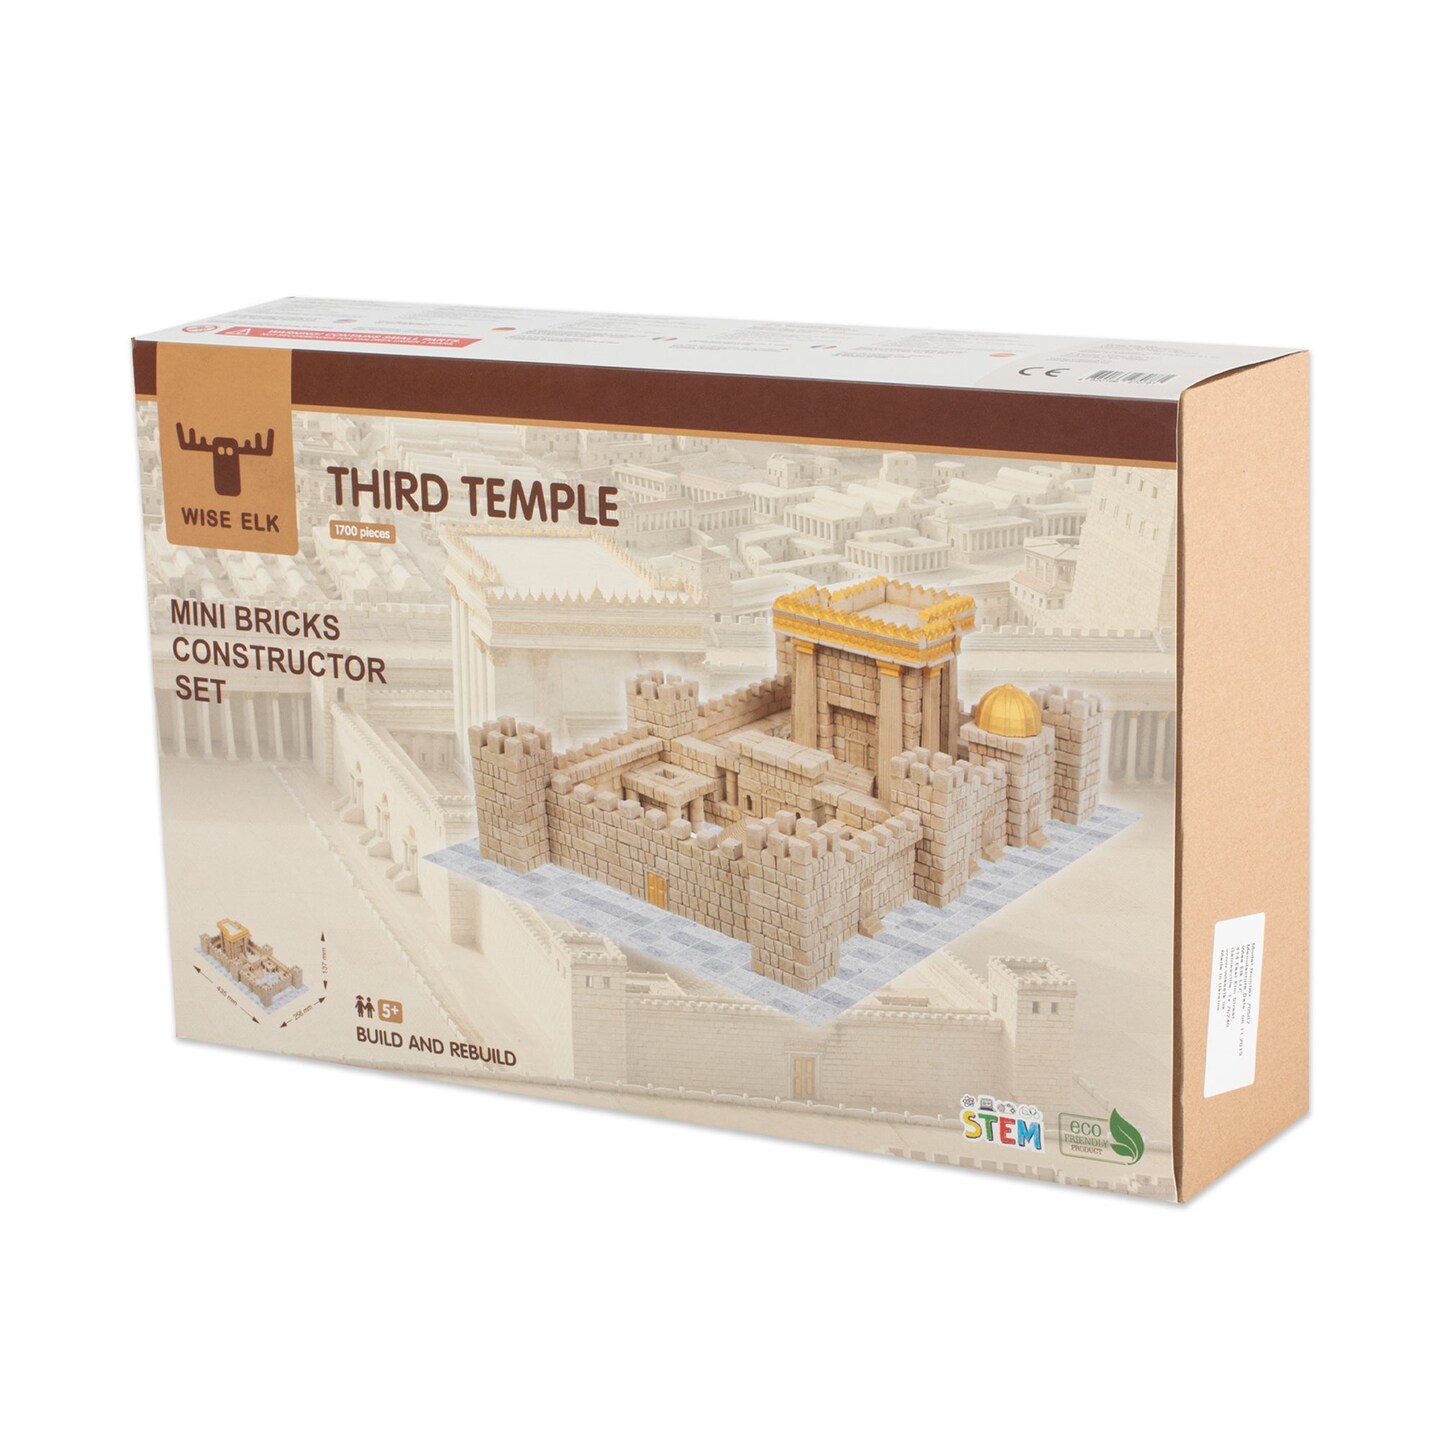 Mini Bricks Construction Set - Third Temple